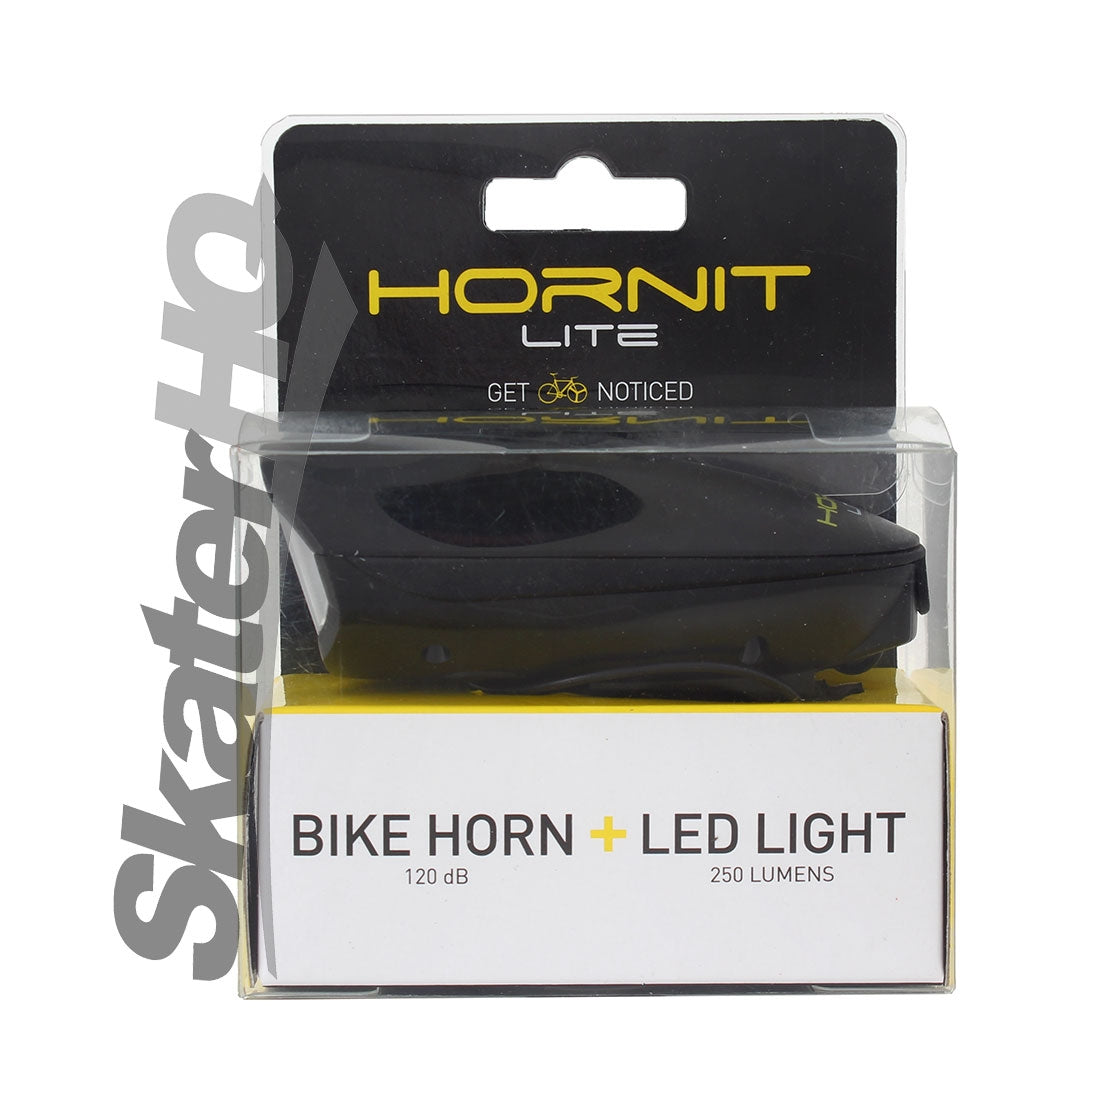 Hornit Lite Bike Horn &amp; Light - Black Scooter Accessories